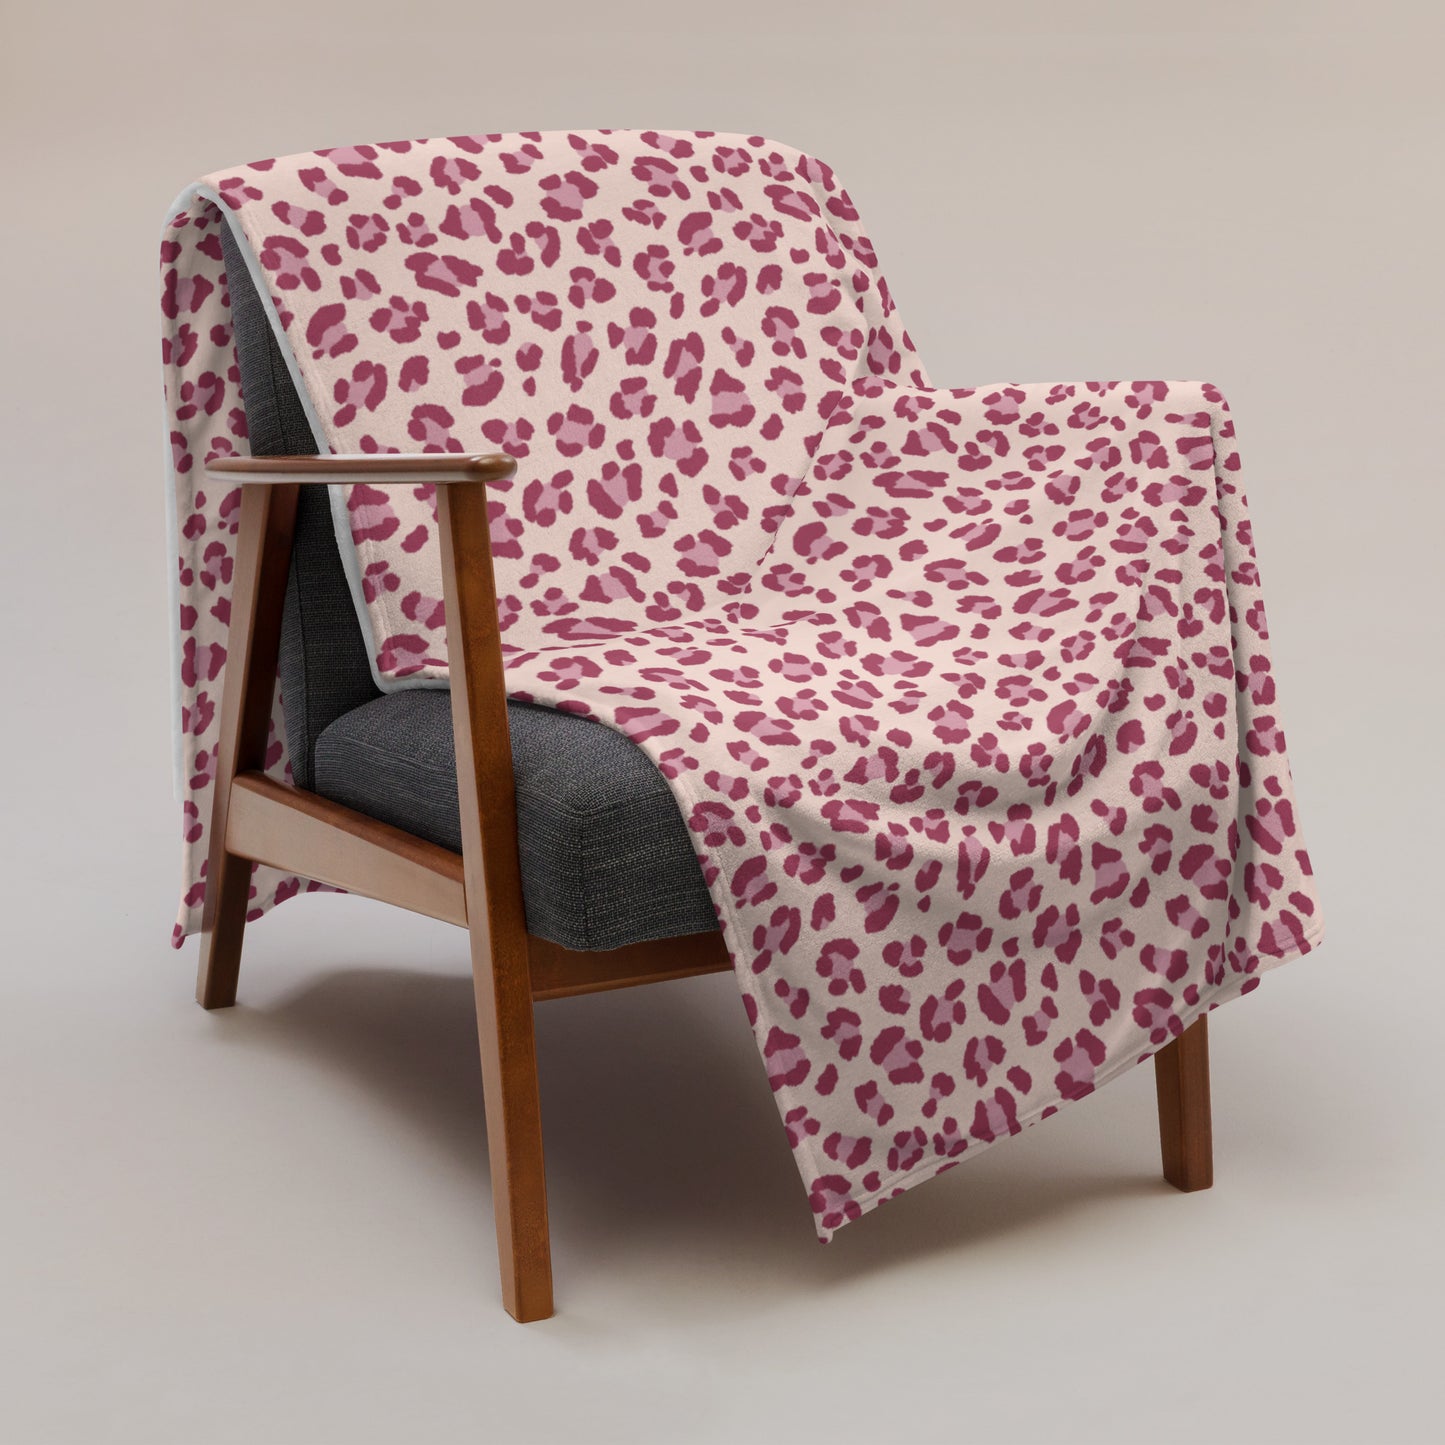 Pink Leopard Print Throw Blanket